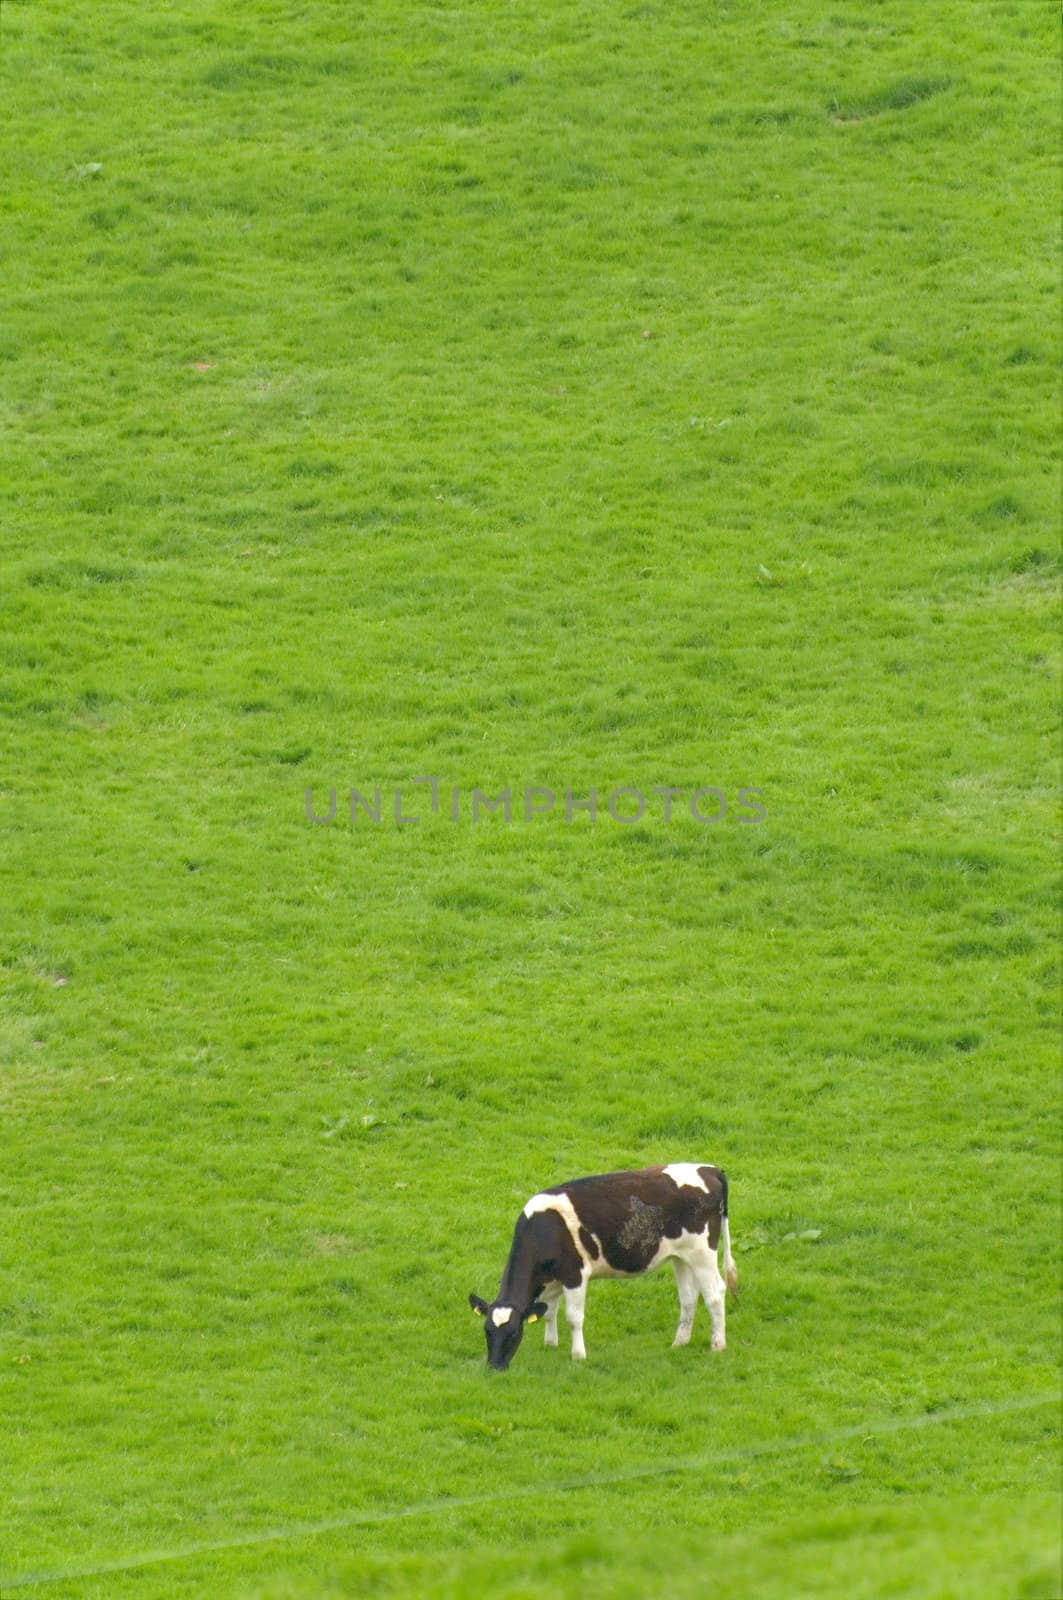 Cow grazing by t3mujin